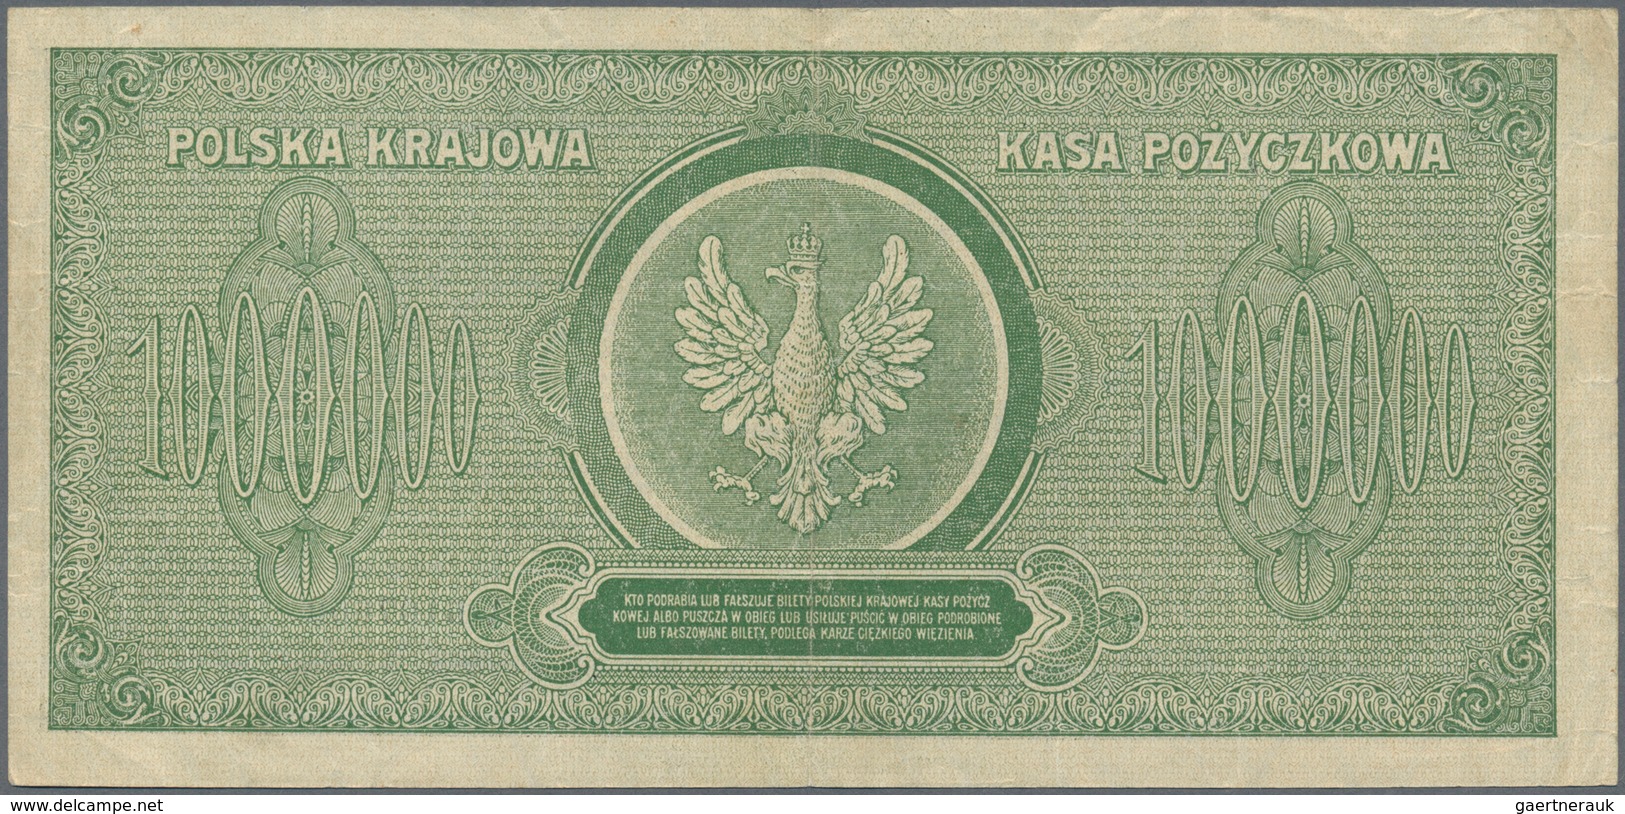 02192 Poland / Polen: Pair Of The 1 Million Marek Polskich 1923, P.37, Both With Tiny Spots, Lightly Toned - Poland